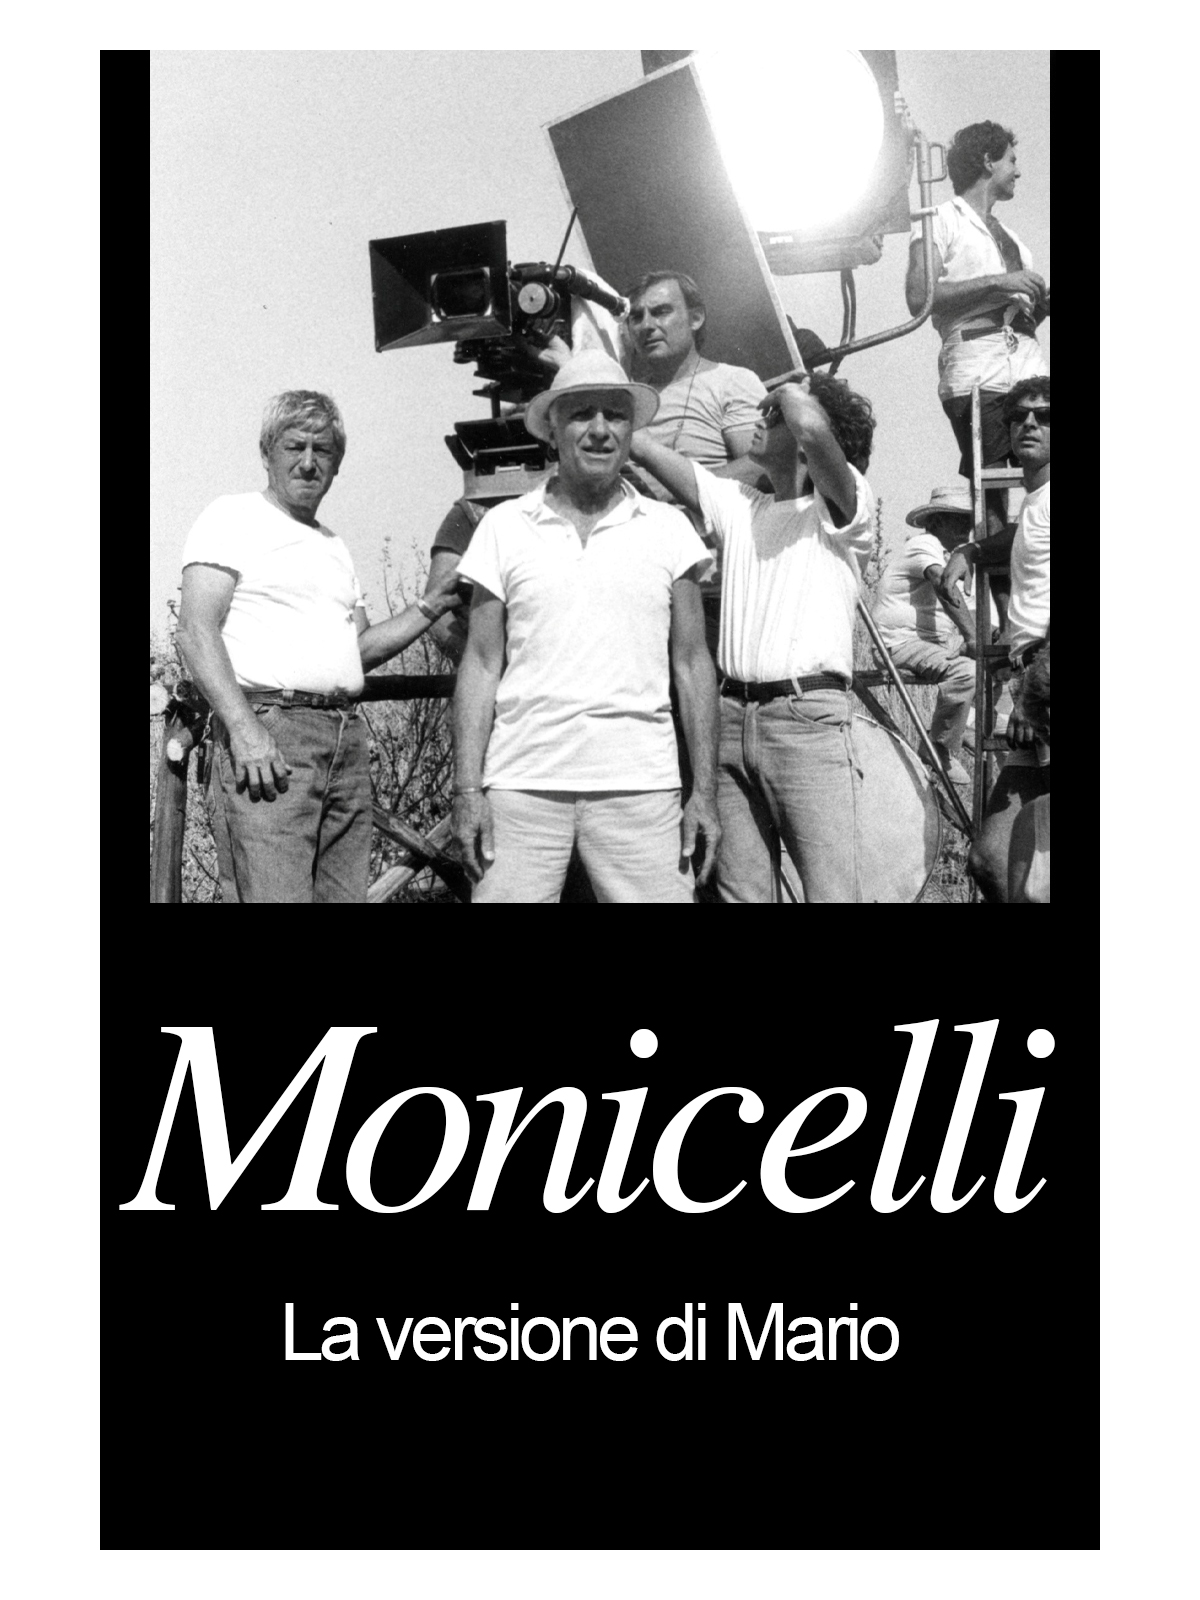 Monicelli Mario’s Version